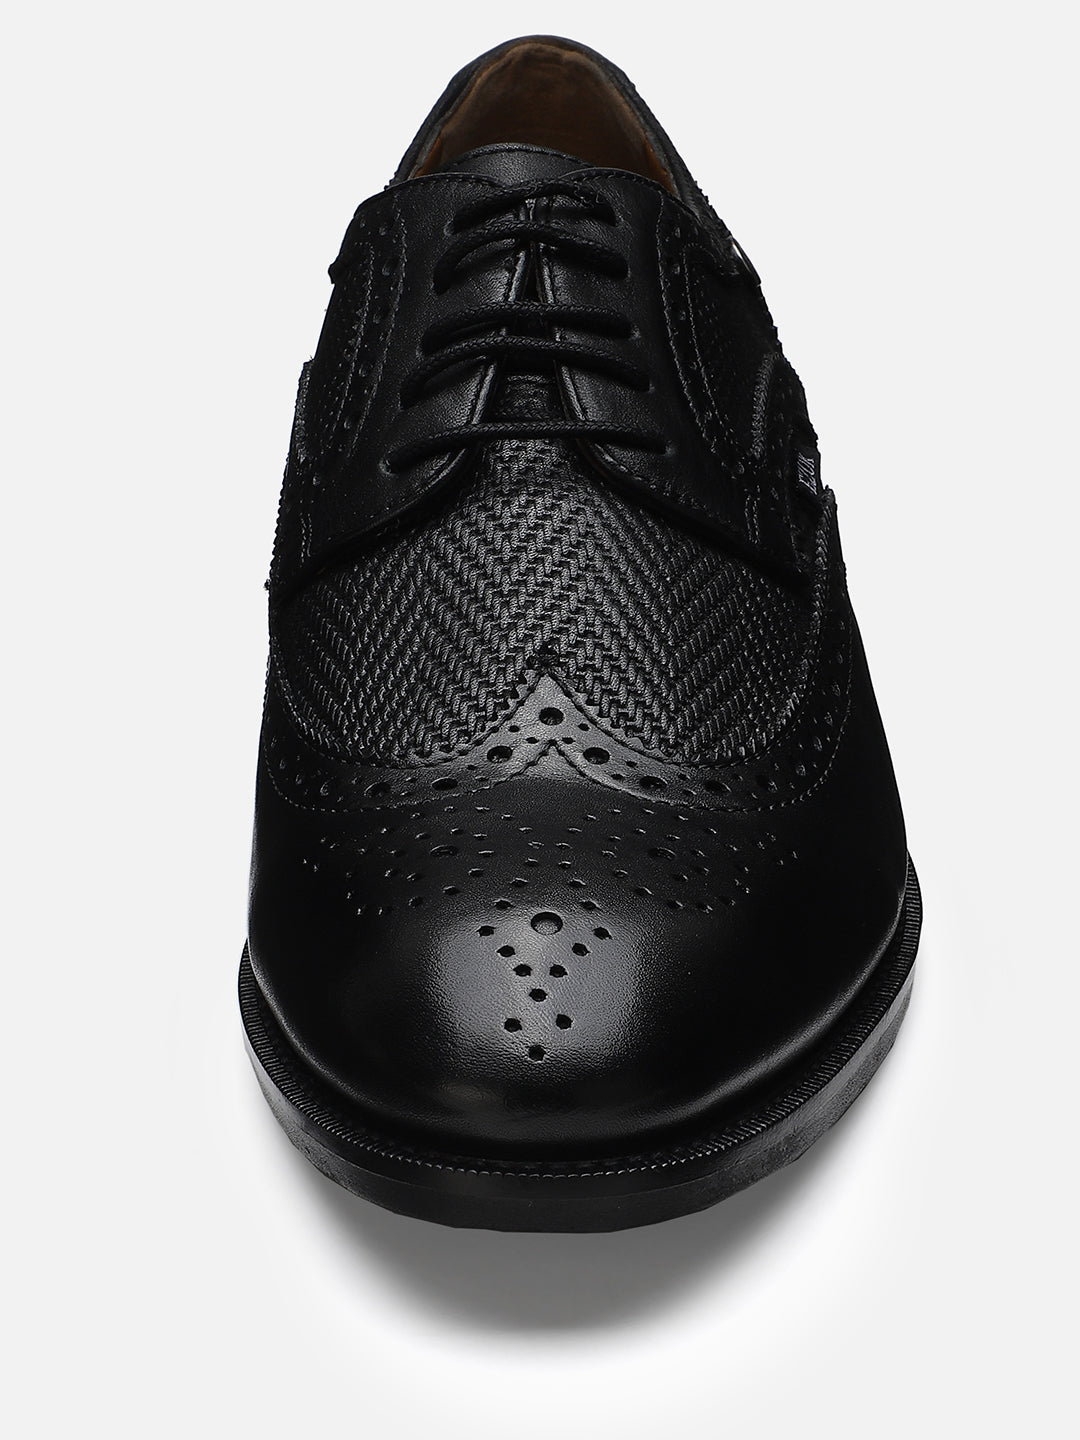 Ezok Men Black Perforated Leather Shoes